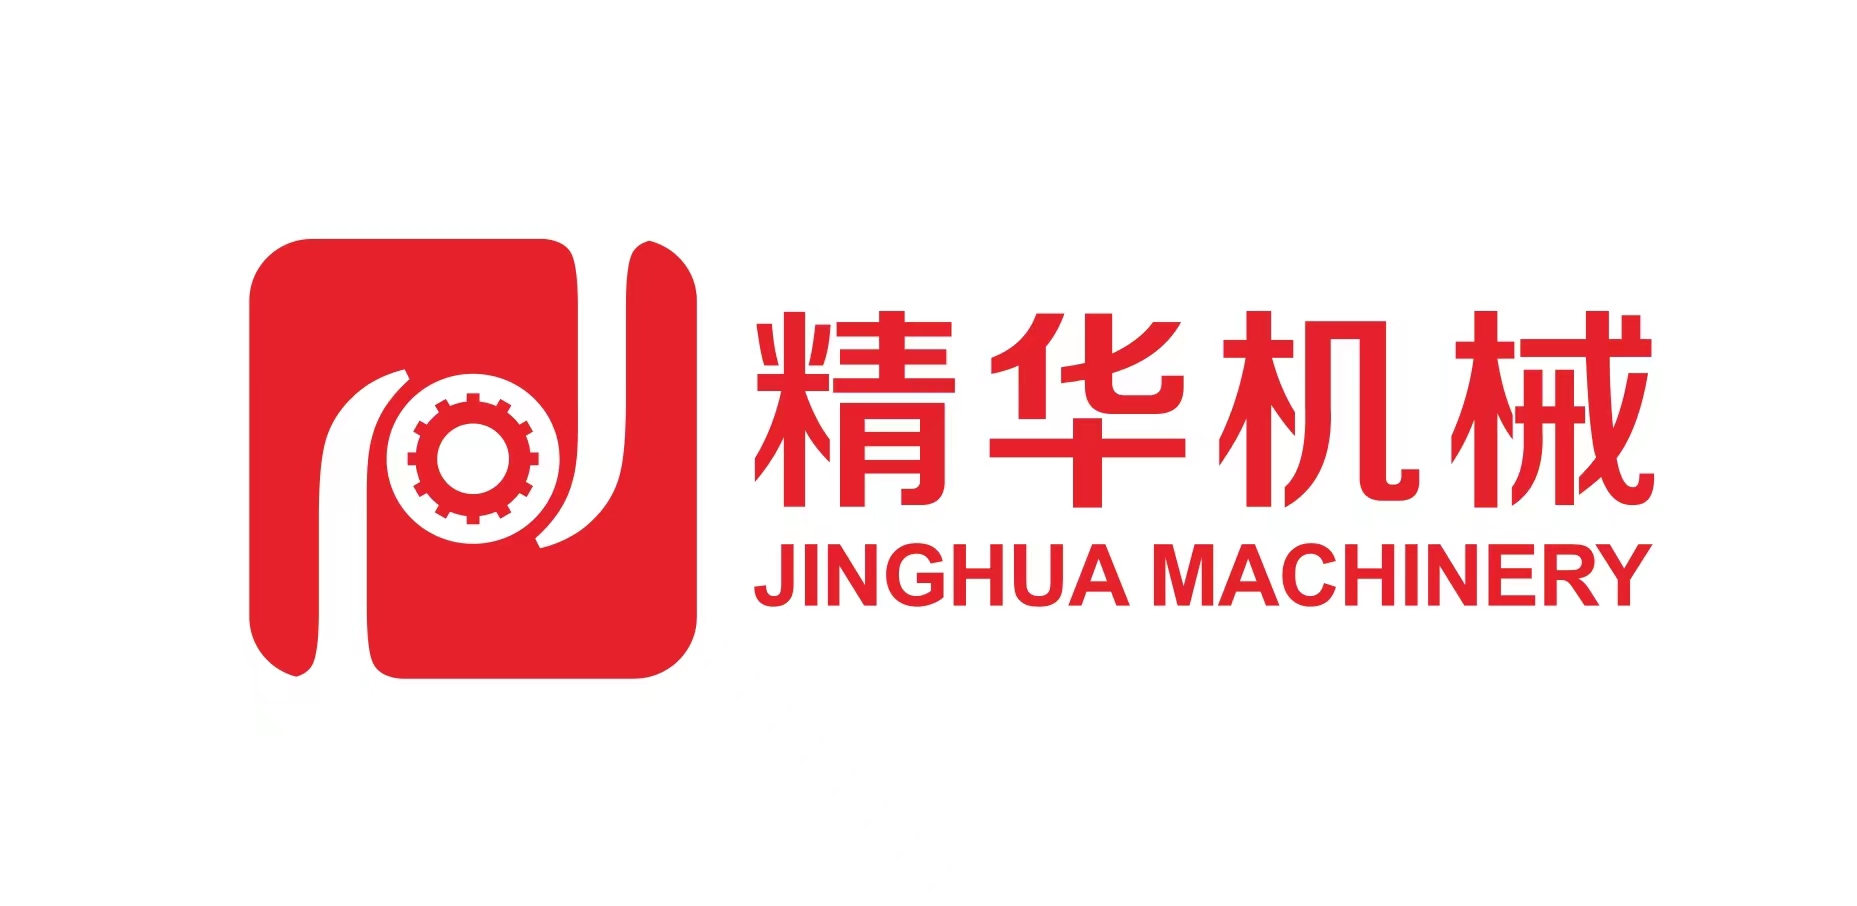 company name changed in 2023 JINGHUA machinery and ZHEREN machinery